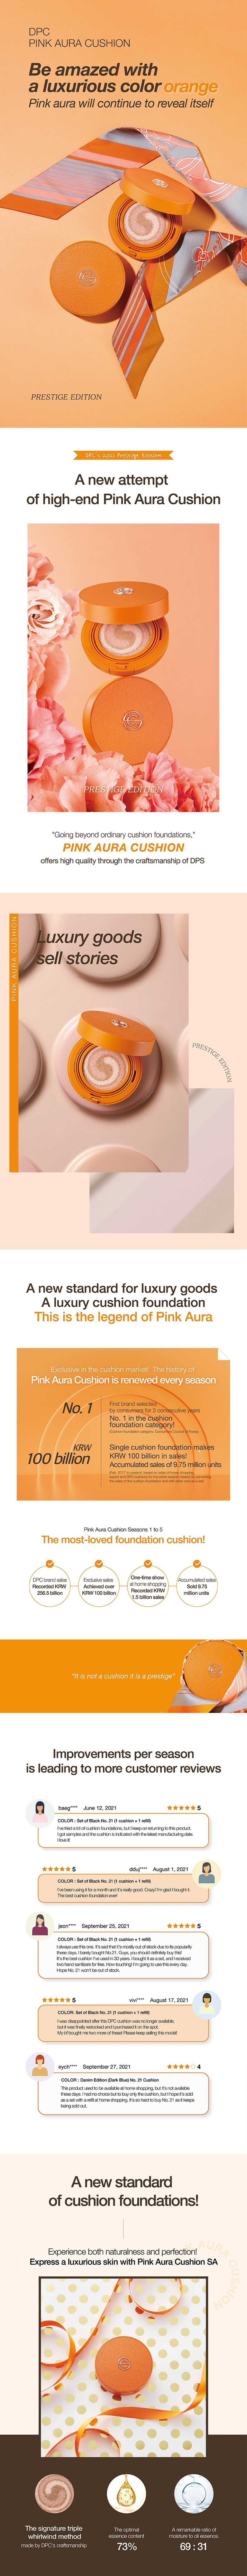 DPC Malaysia - benefits of DPC Pink Aura Cushion SA - BeautyFoo Mall Malaysia